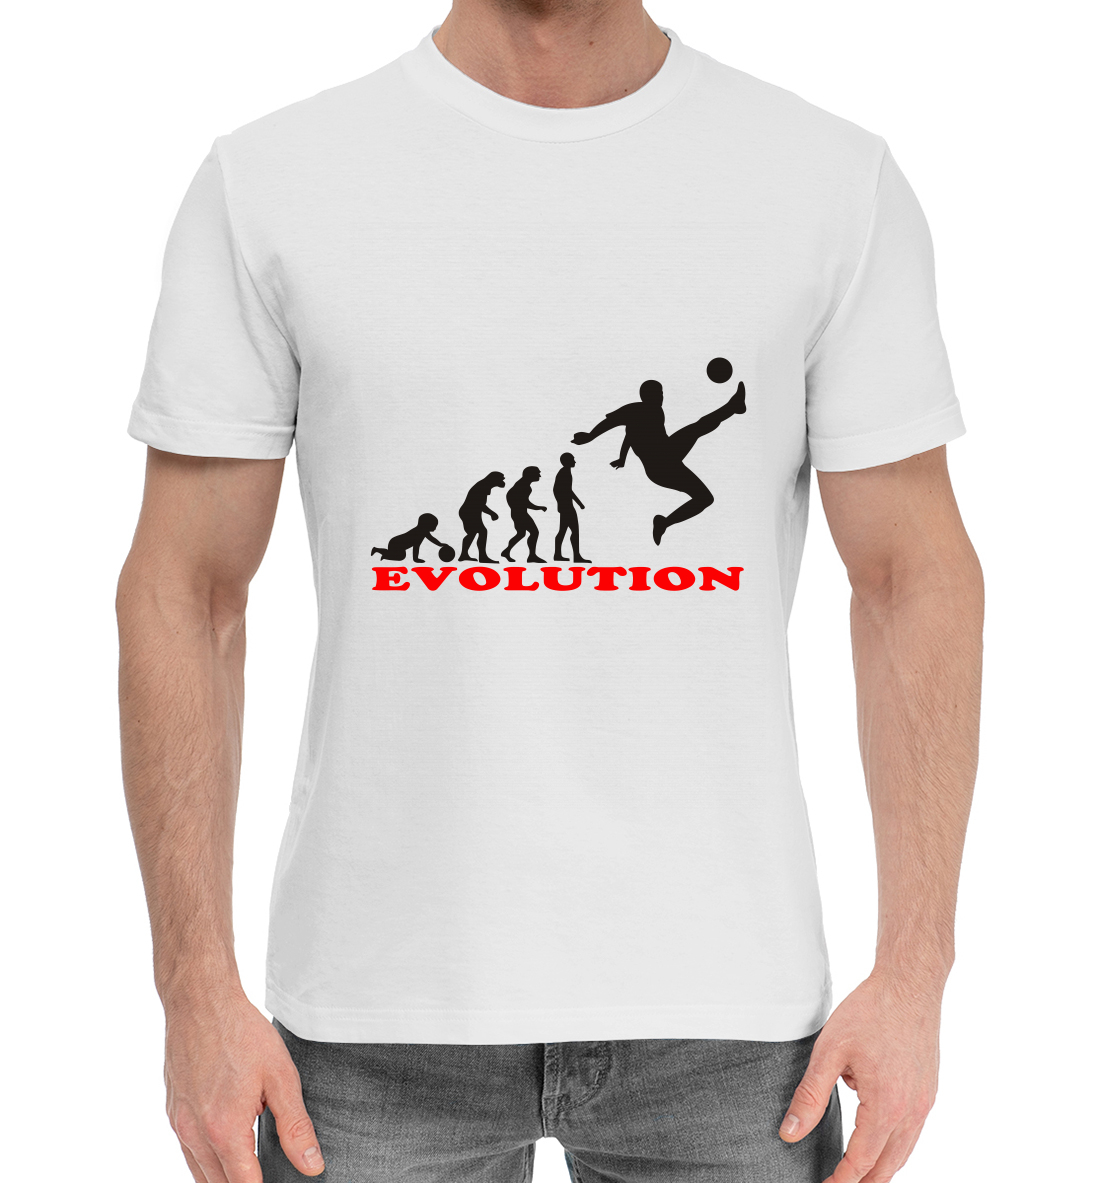 Мужская Хлопковая футболка Футбольная эволюция, артикул FTO-959795-hfu-2mp